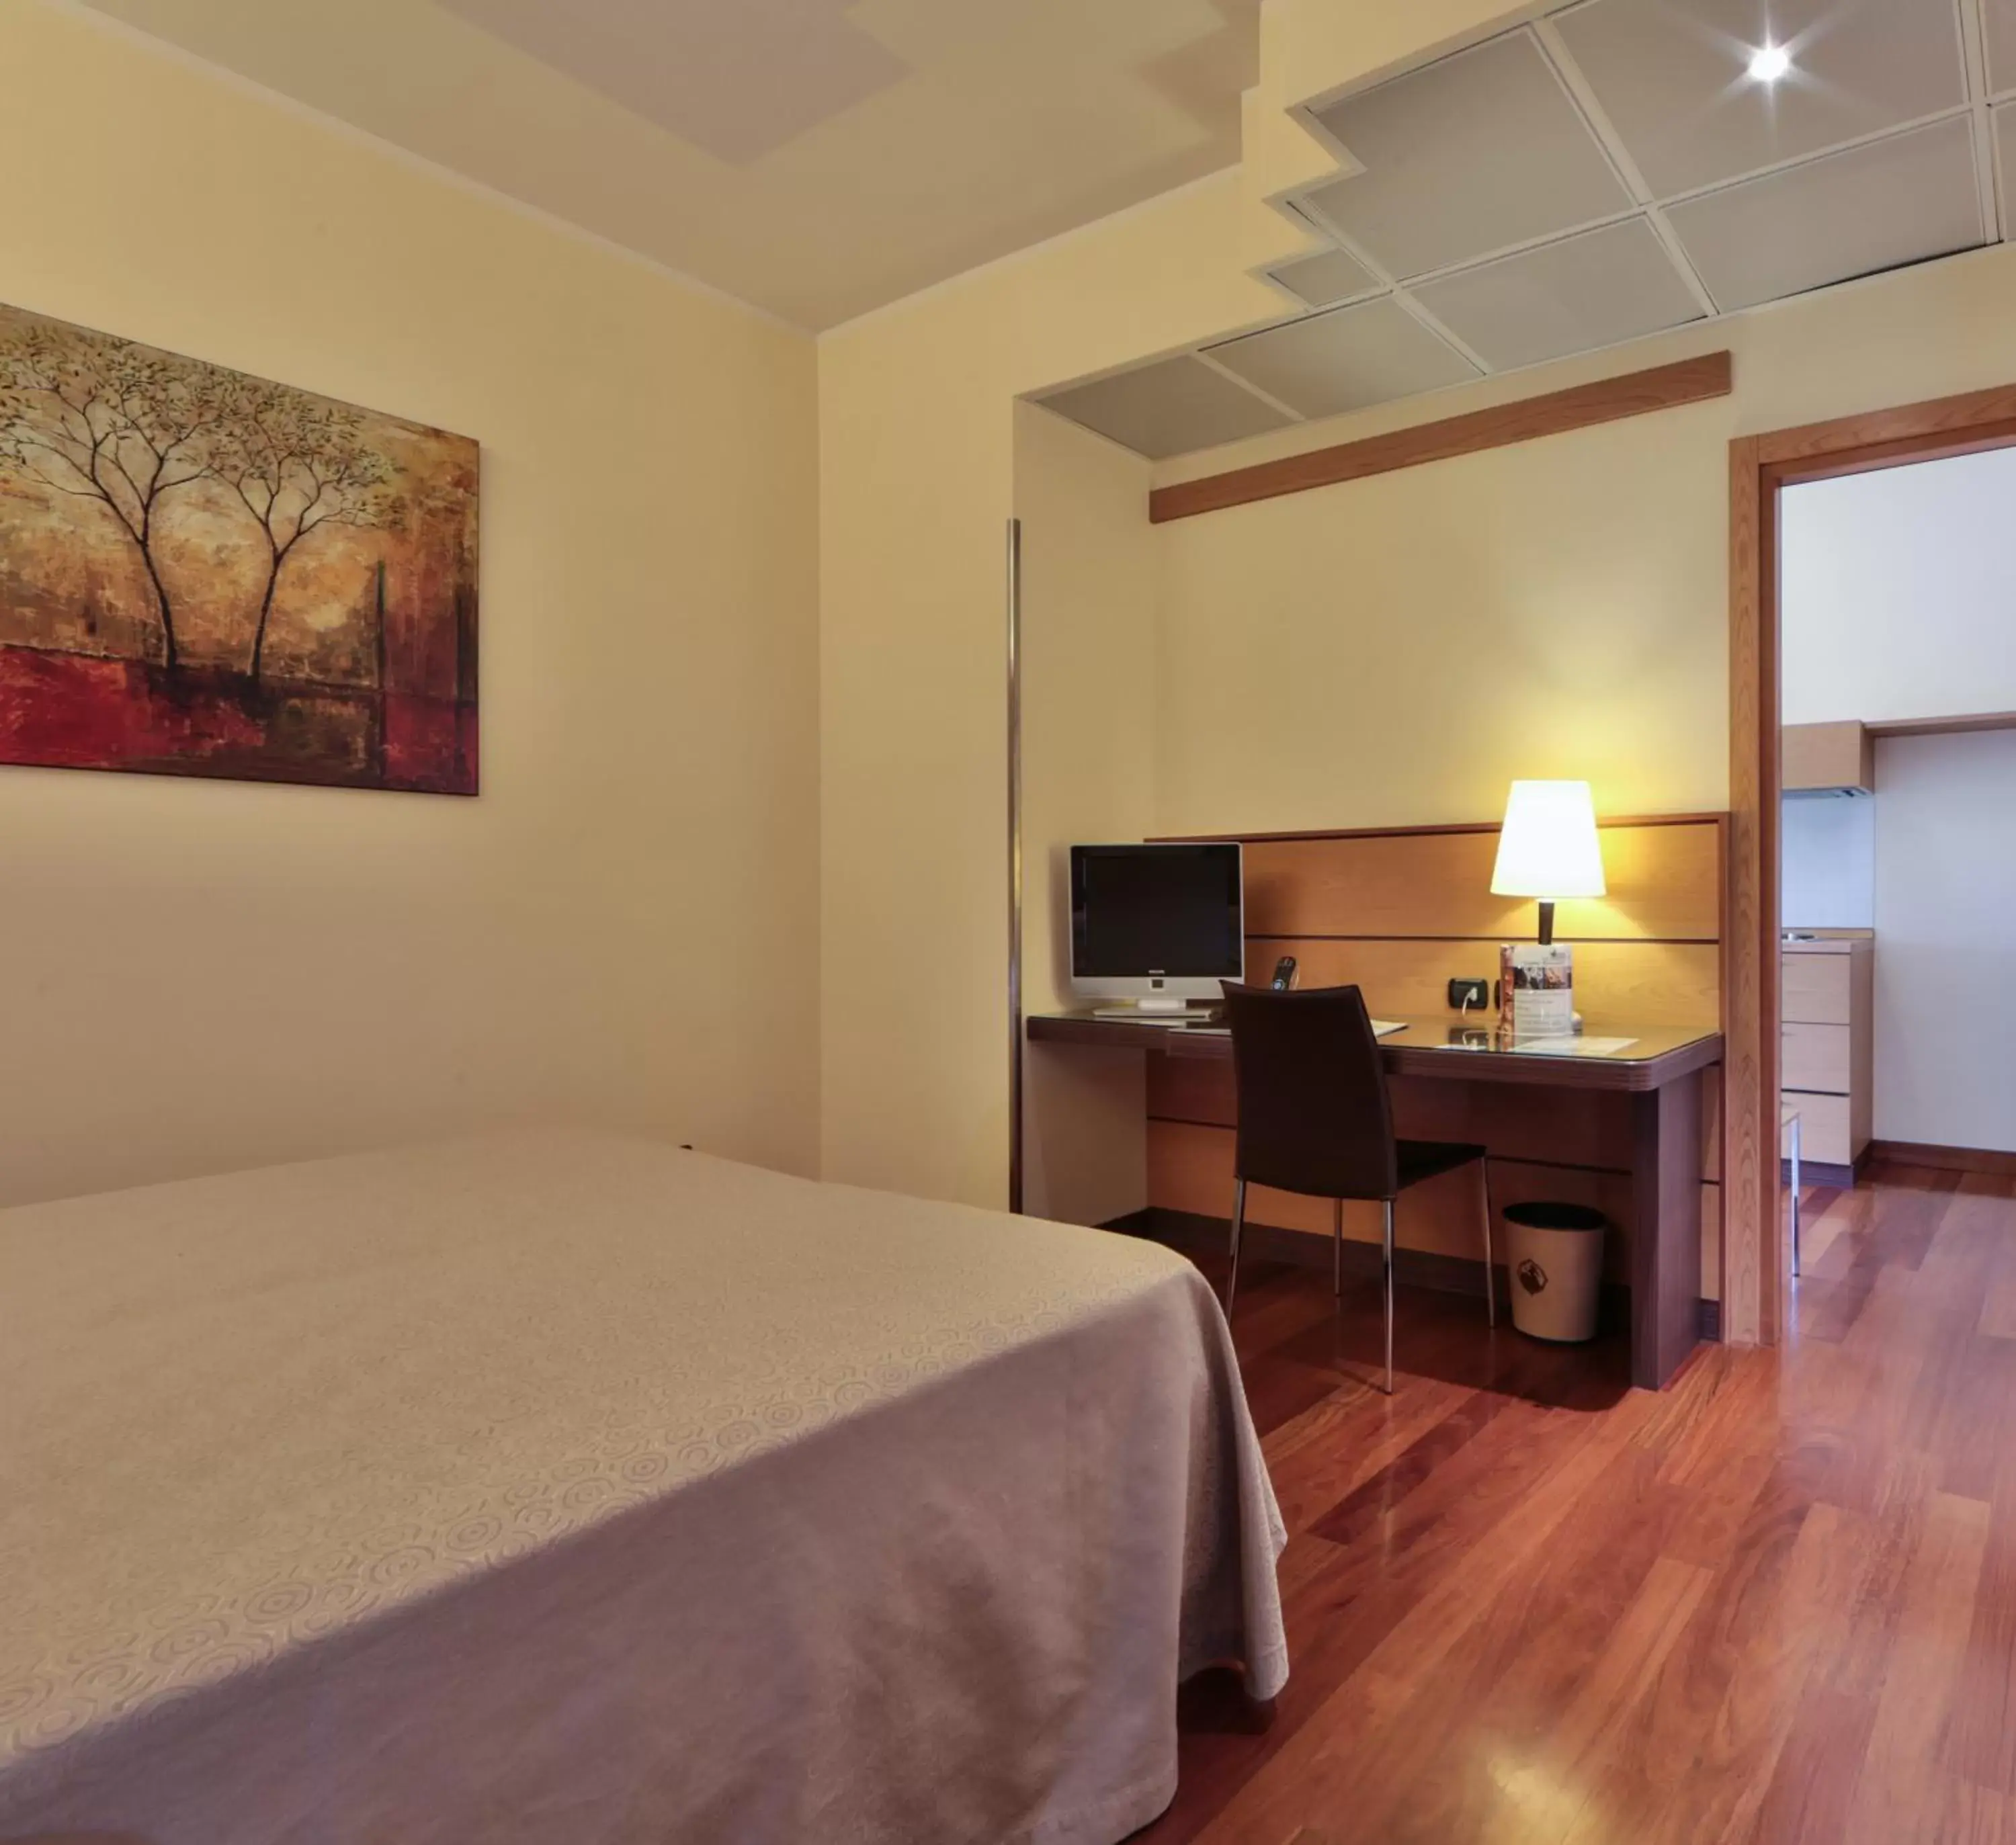 Bedroom, Bed in Best Western Hotel Dei Cavalieri